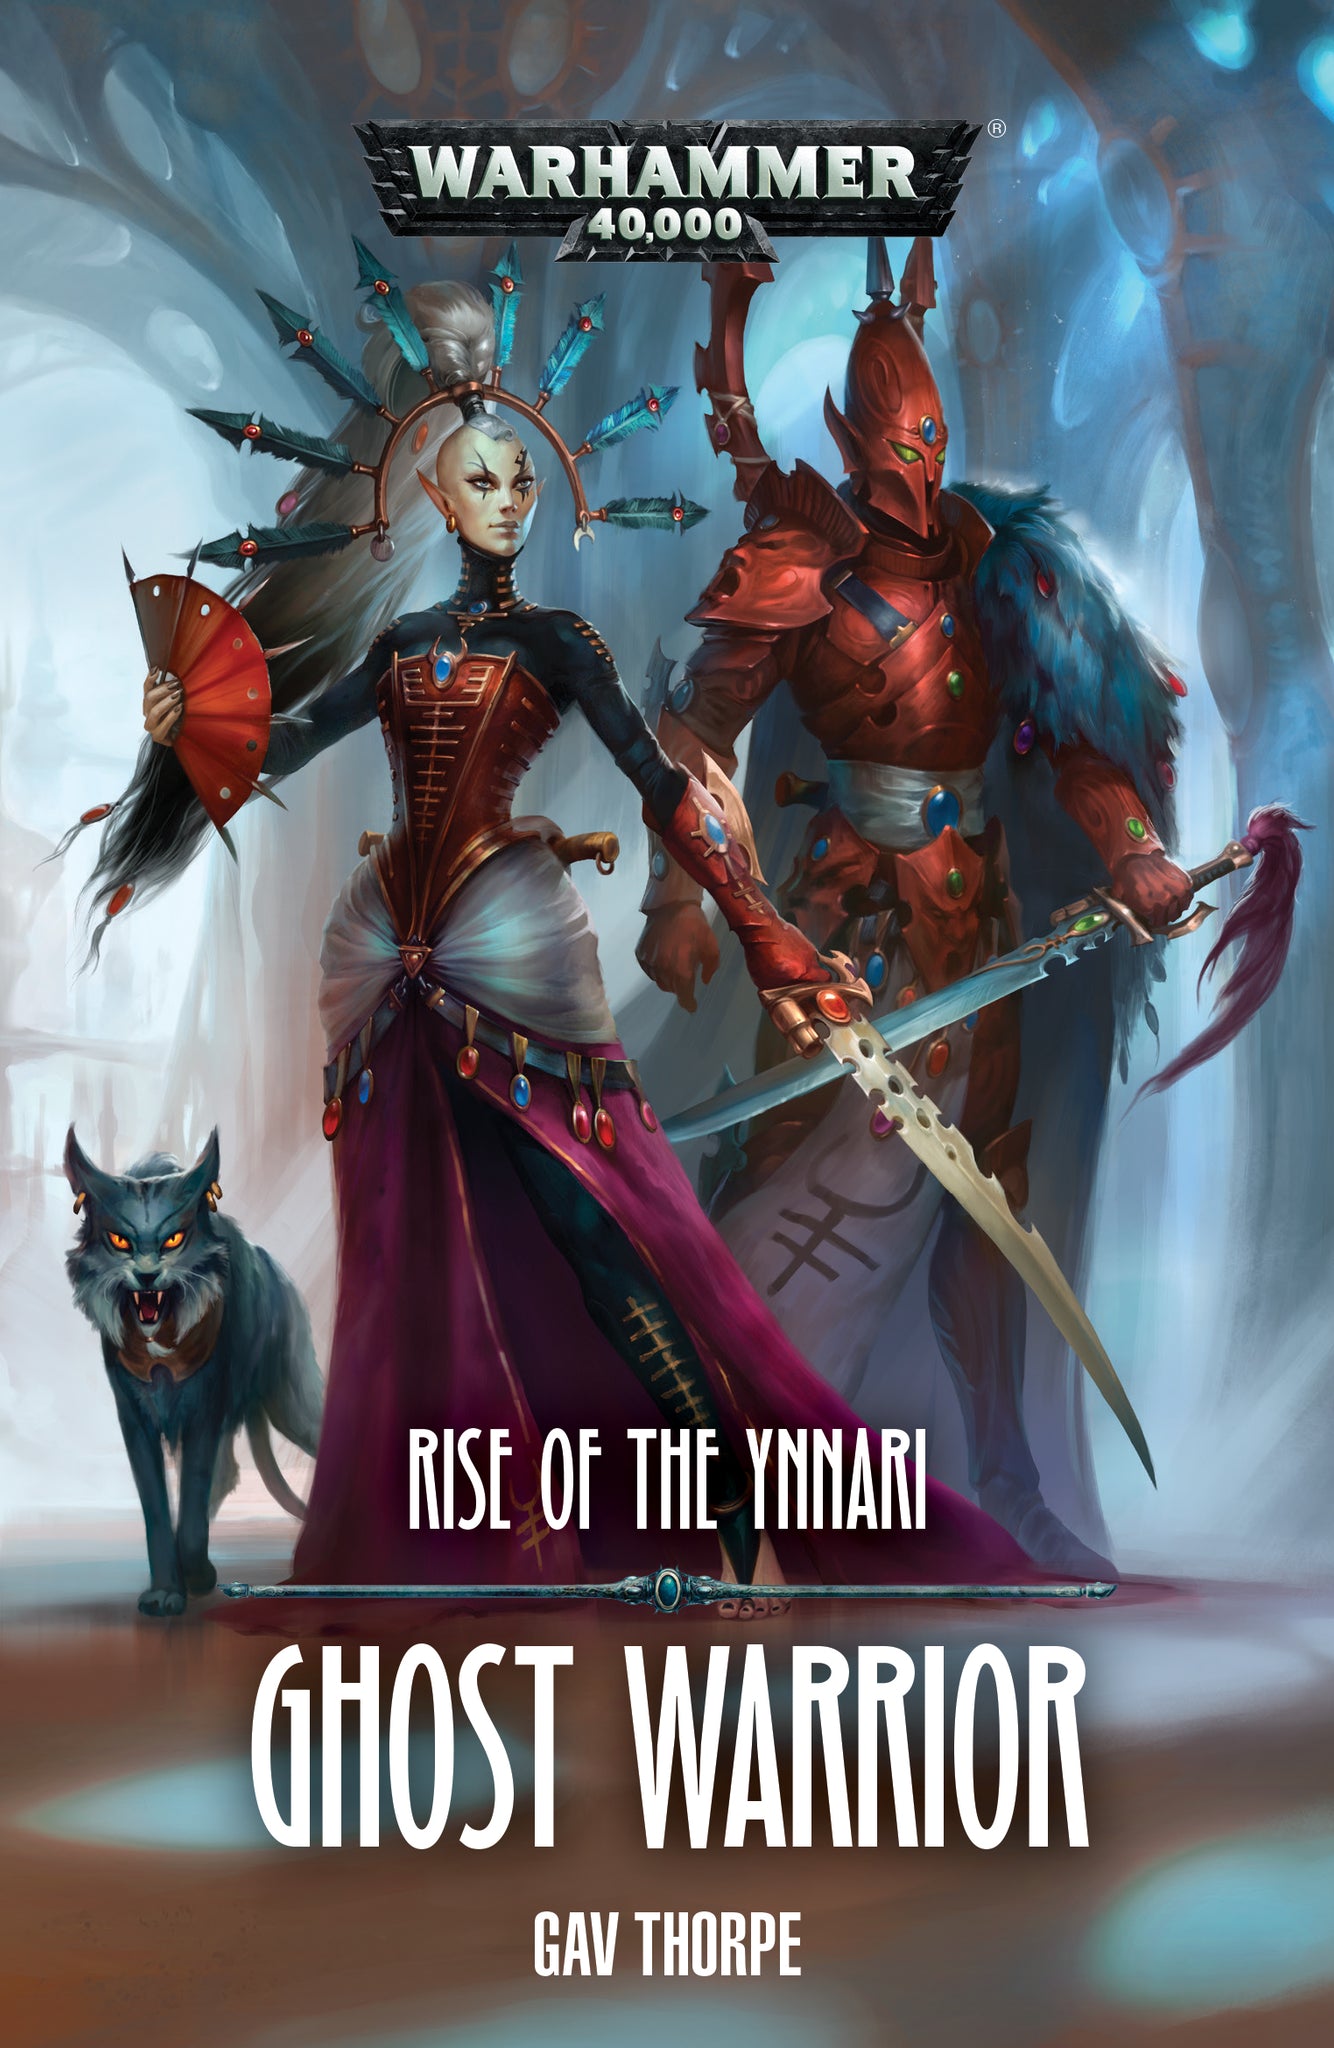 ghost warrior 3 download free